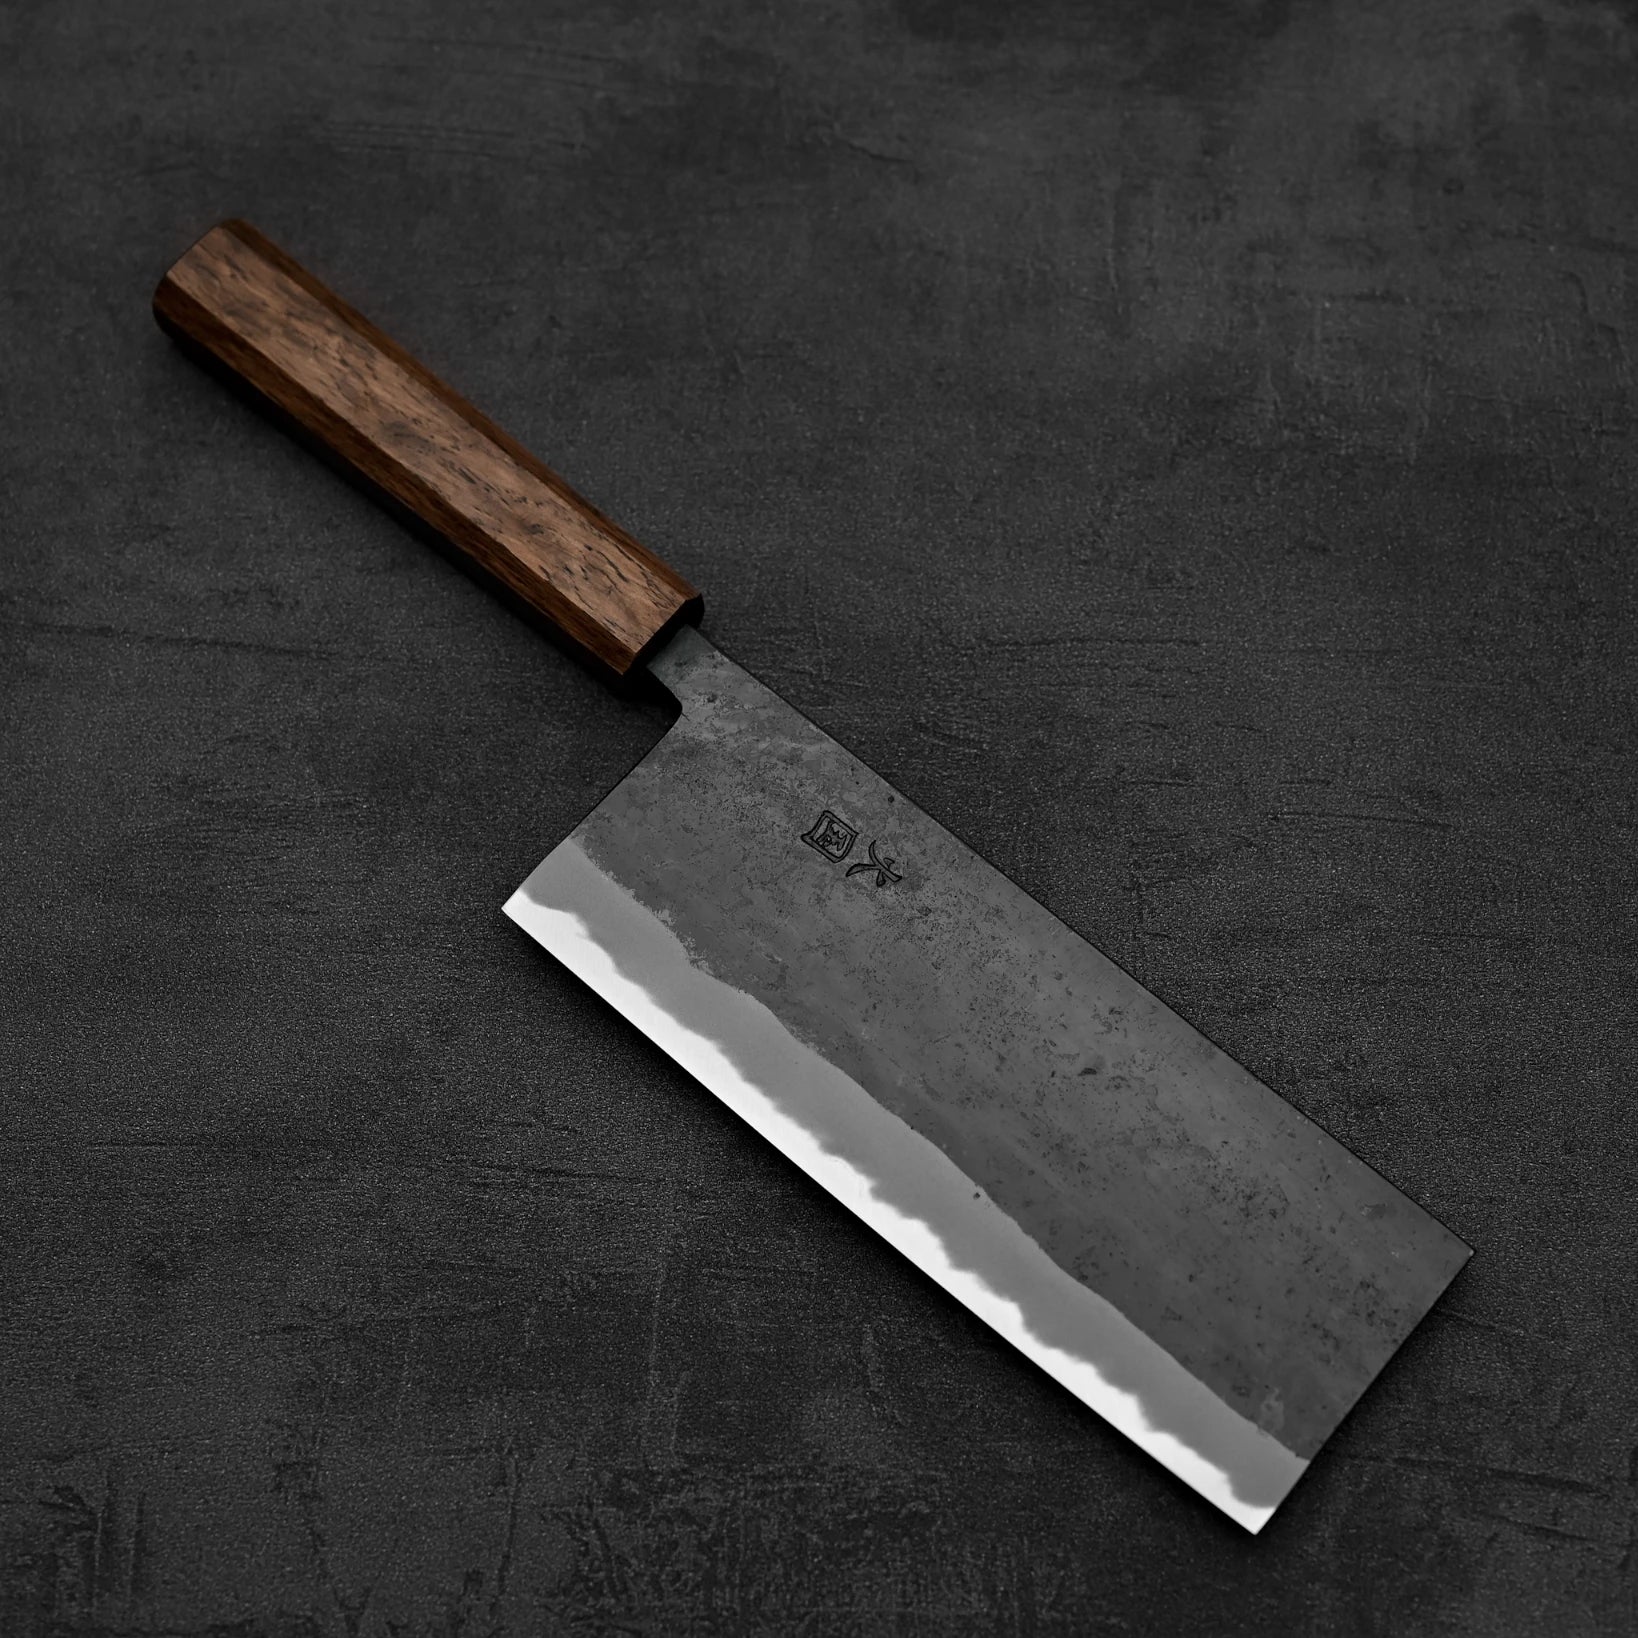 Another top down view of Hinokuni kurouchi shirogami#1 chuka bocho knife